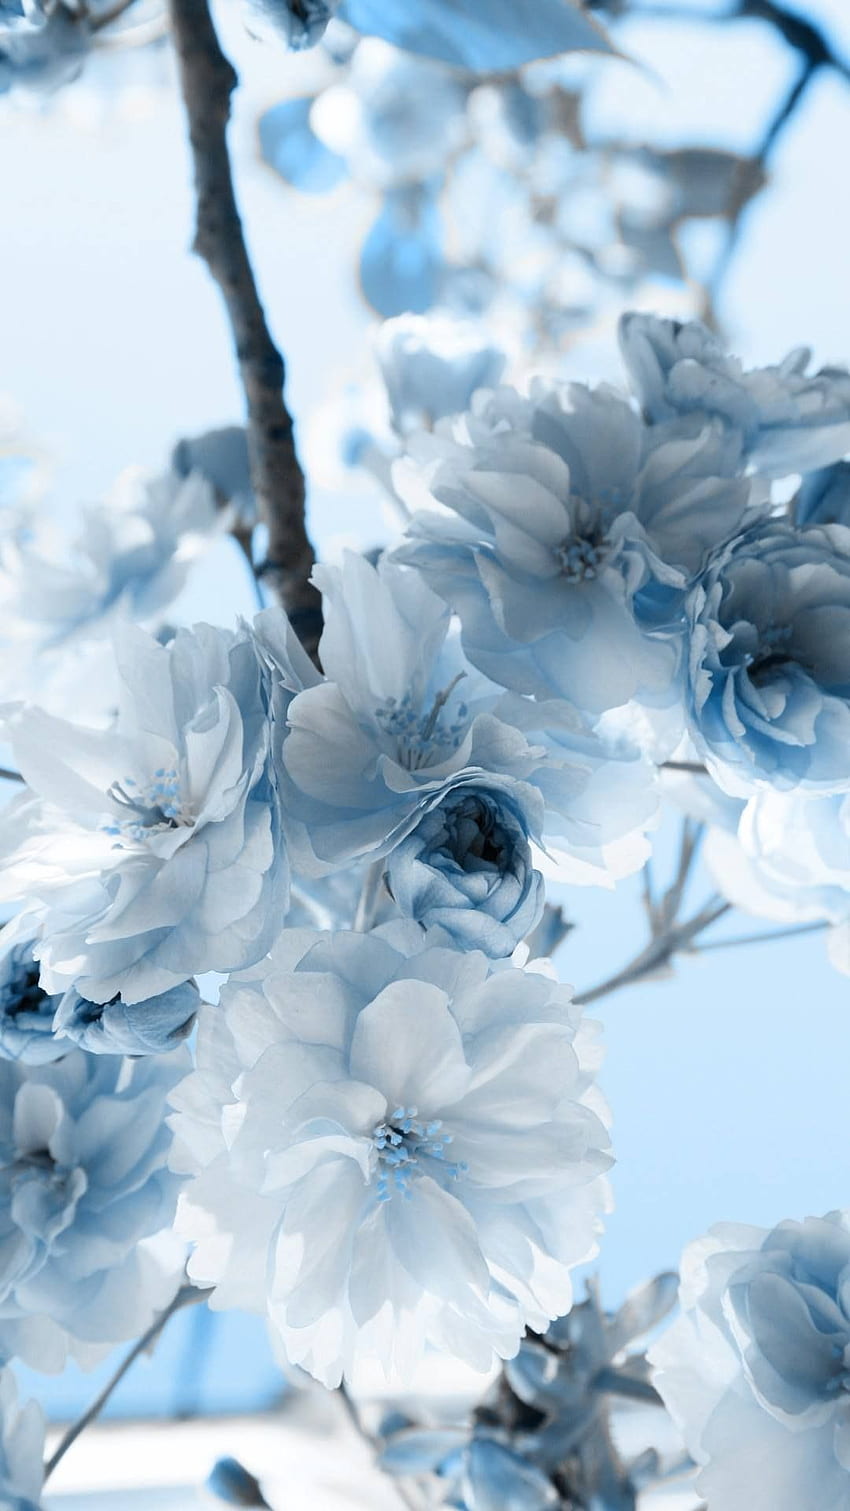 Download wallpaper 750x1334 blue flower dark amoled iphone 7 iphone 8  750x1334 hd background 25964